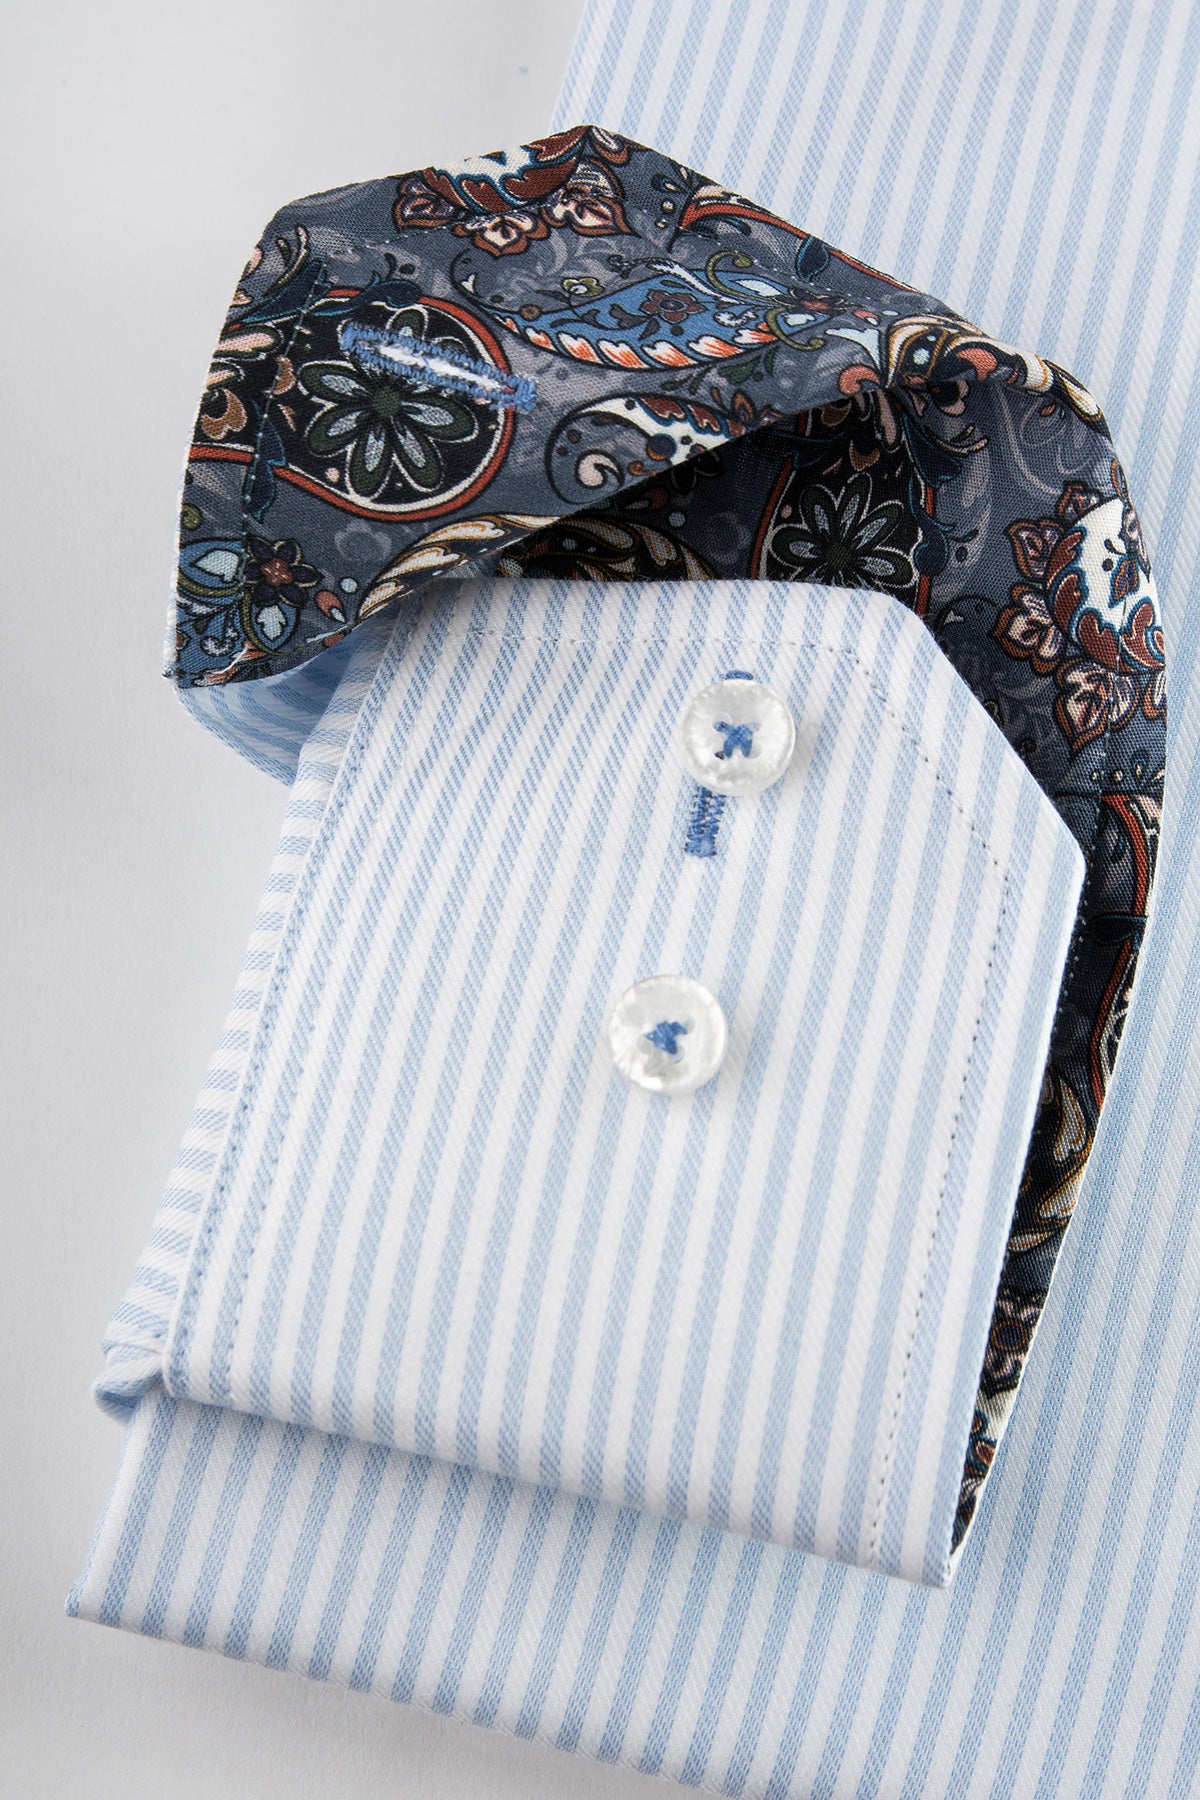 Light blue striped slim fit shirt with contrast details